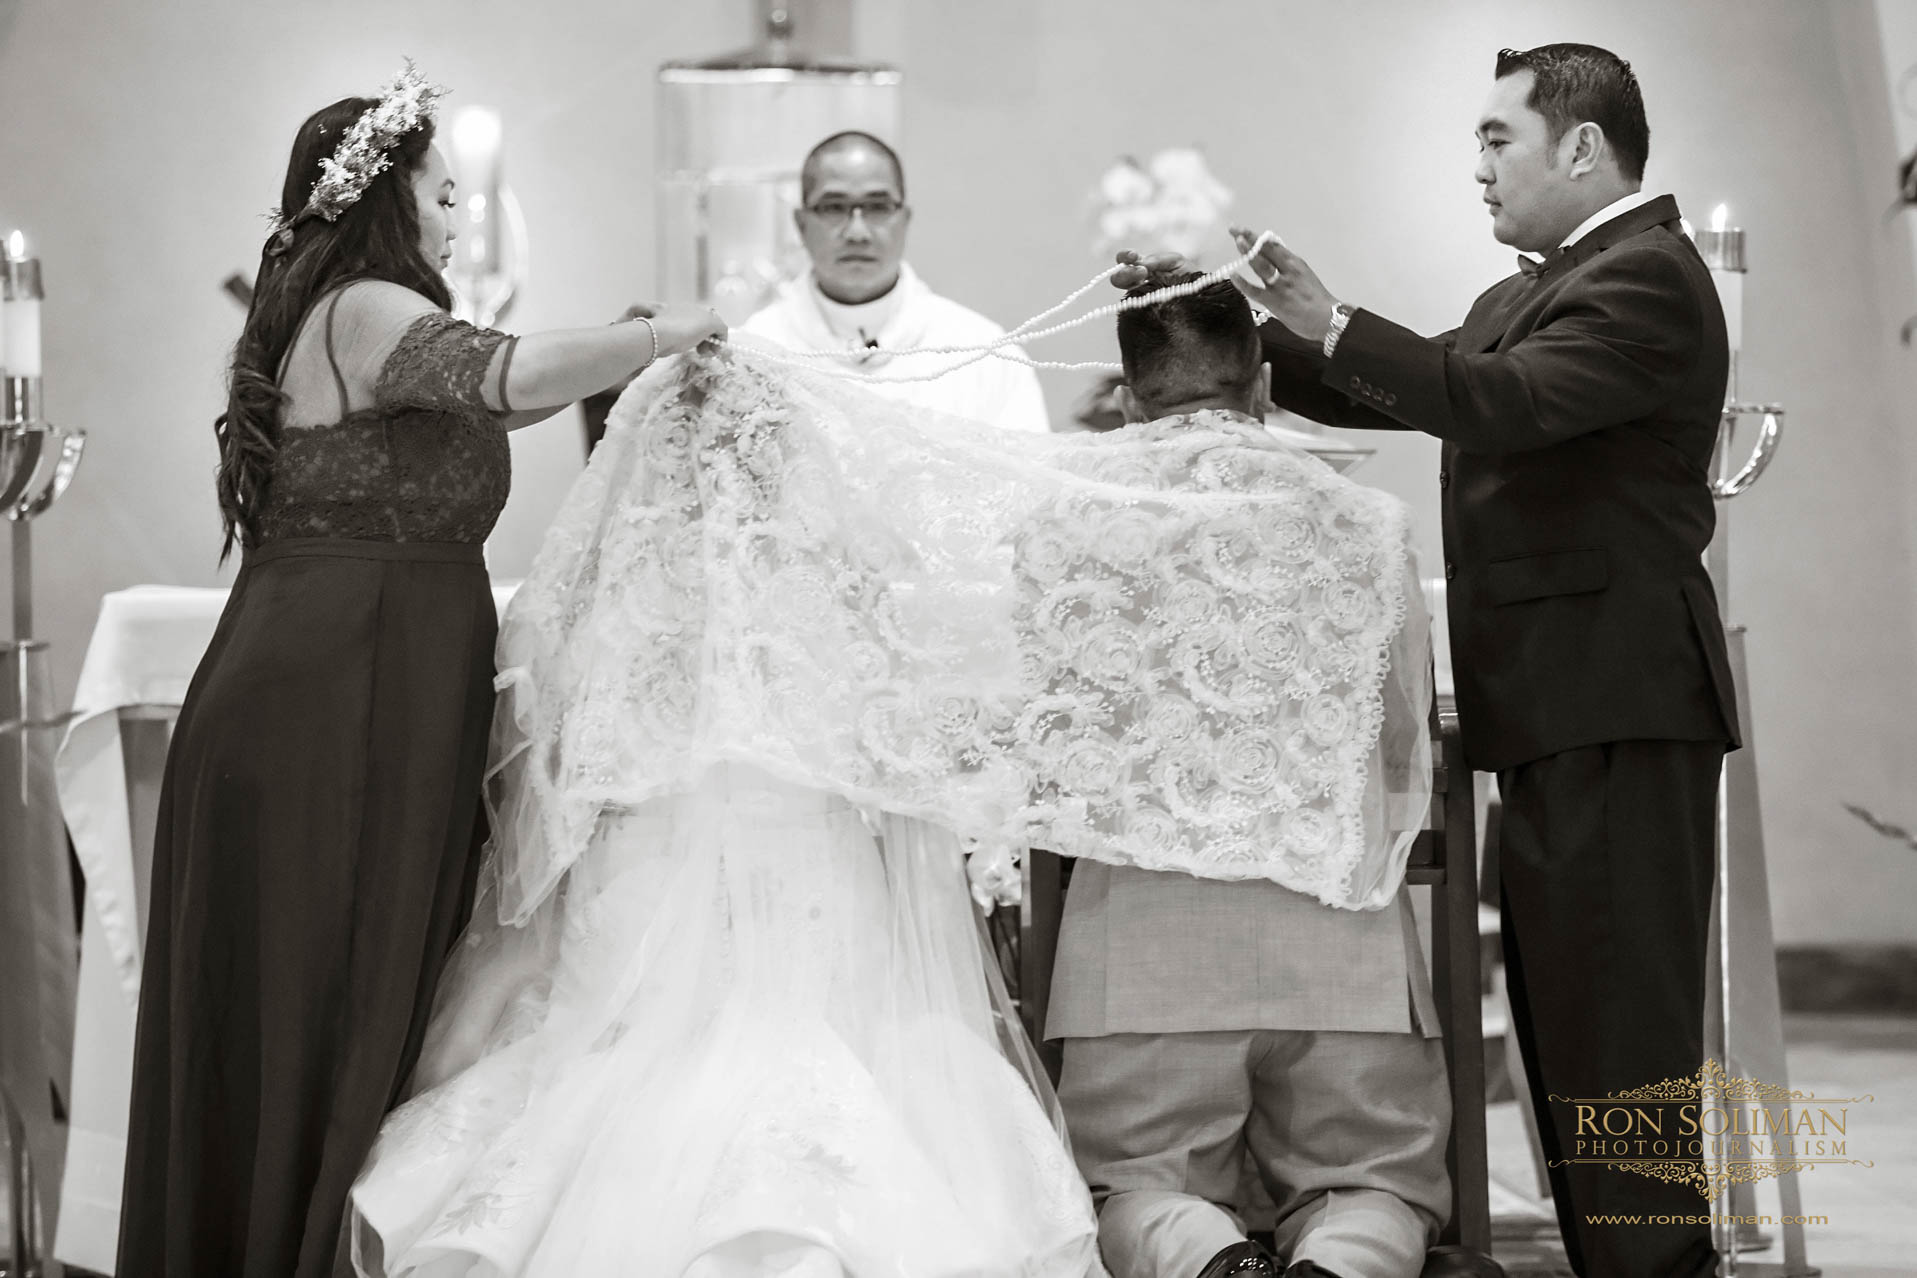 Filipino wedding photos